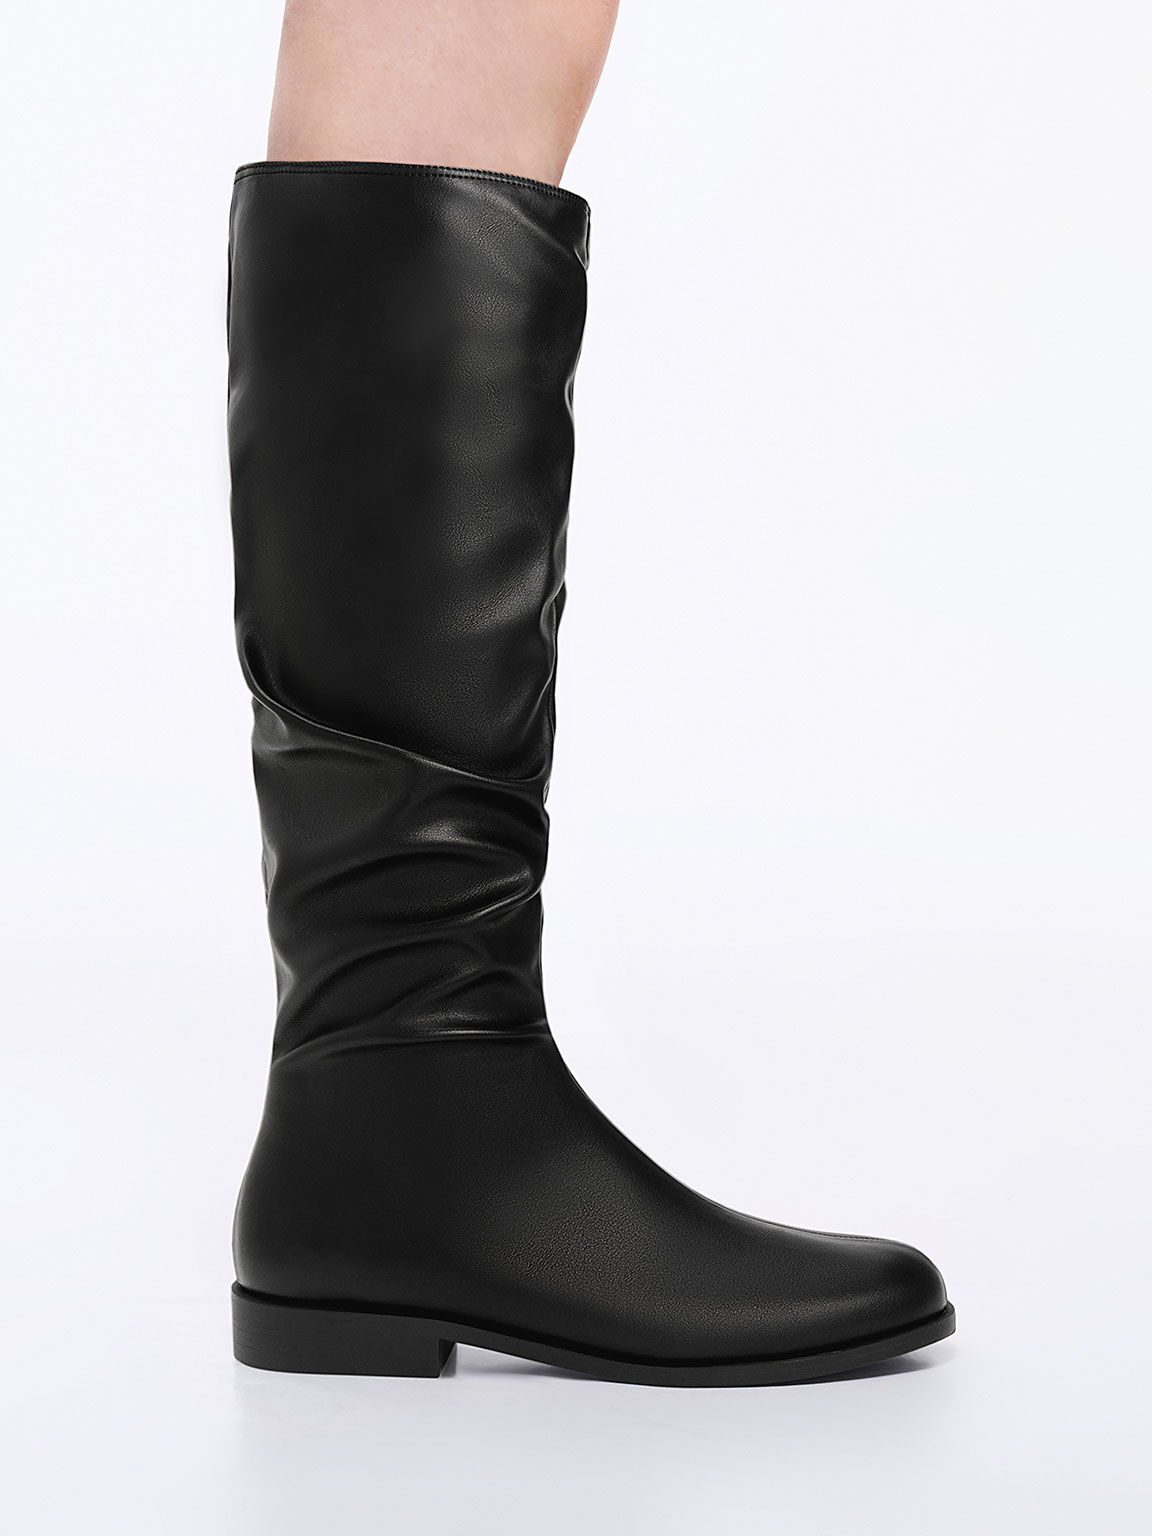 2023 Luxury Women Snow Boots Fashion 2.5cm Platform Warm Fur